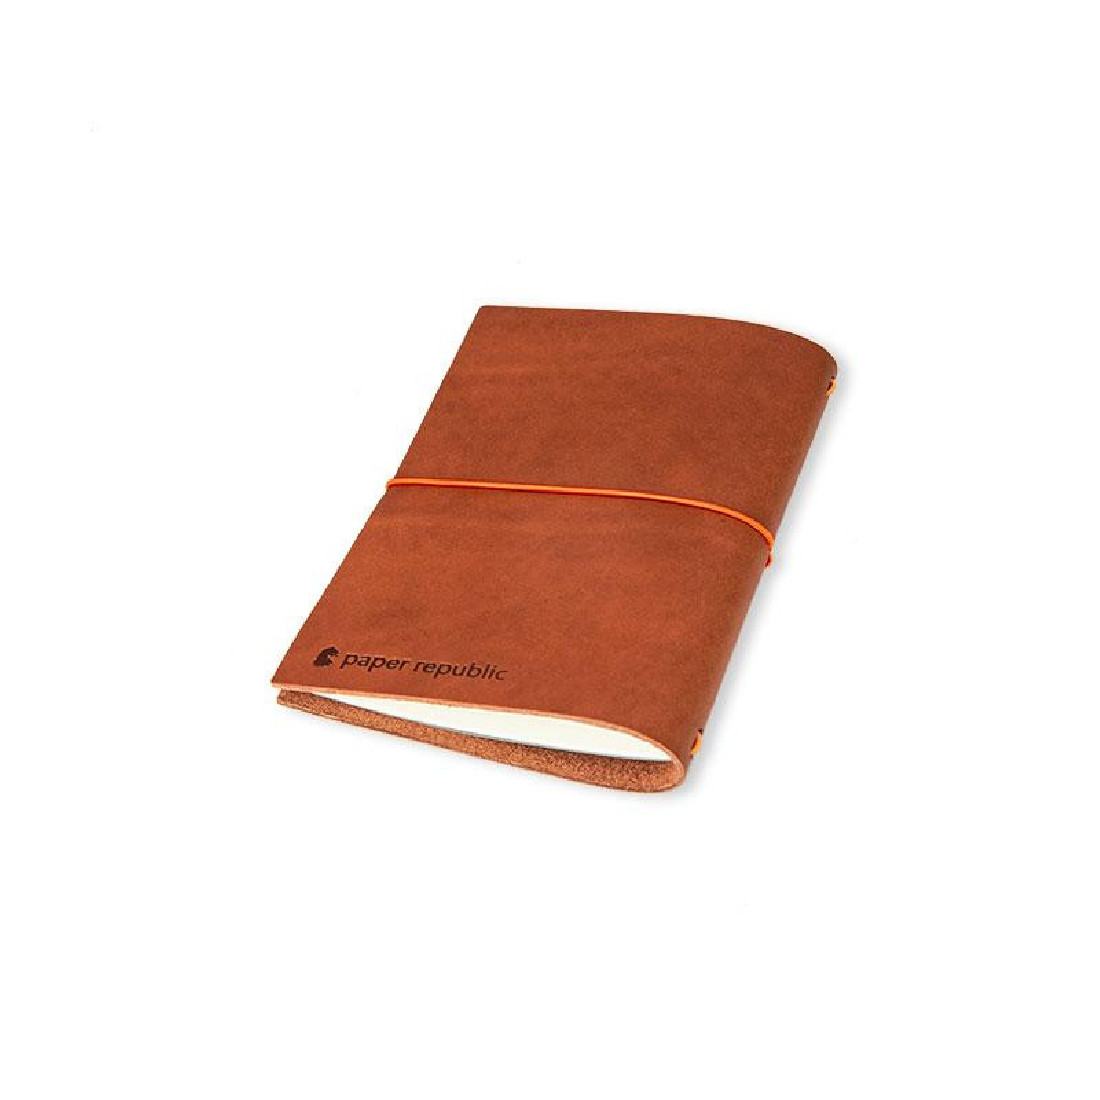 Paper Republic the writers essentials pocket cognac leather journal kit